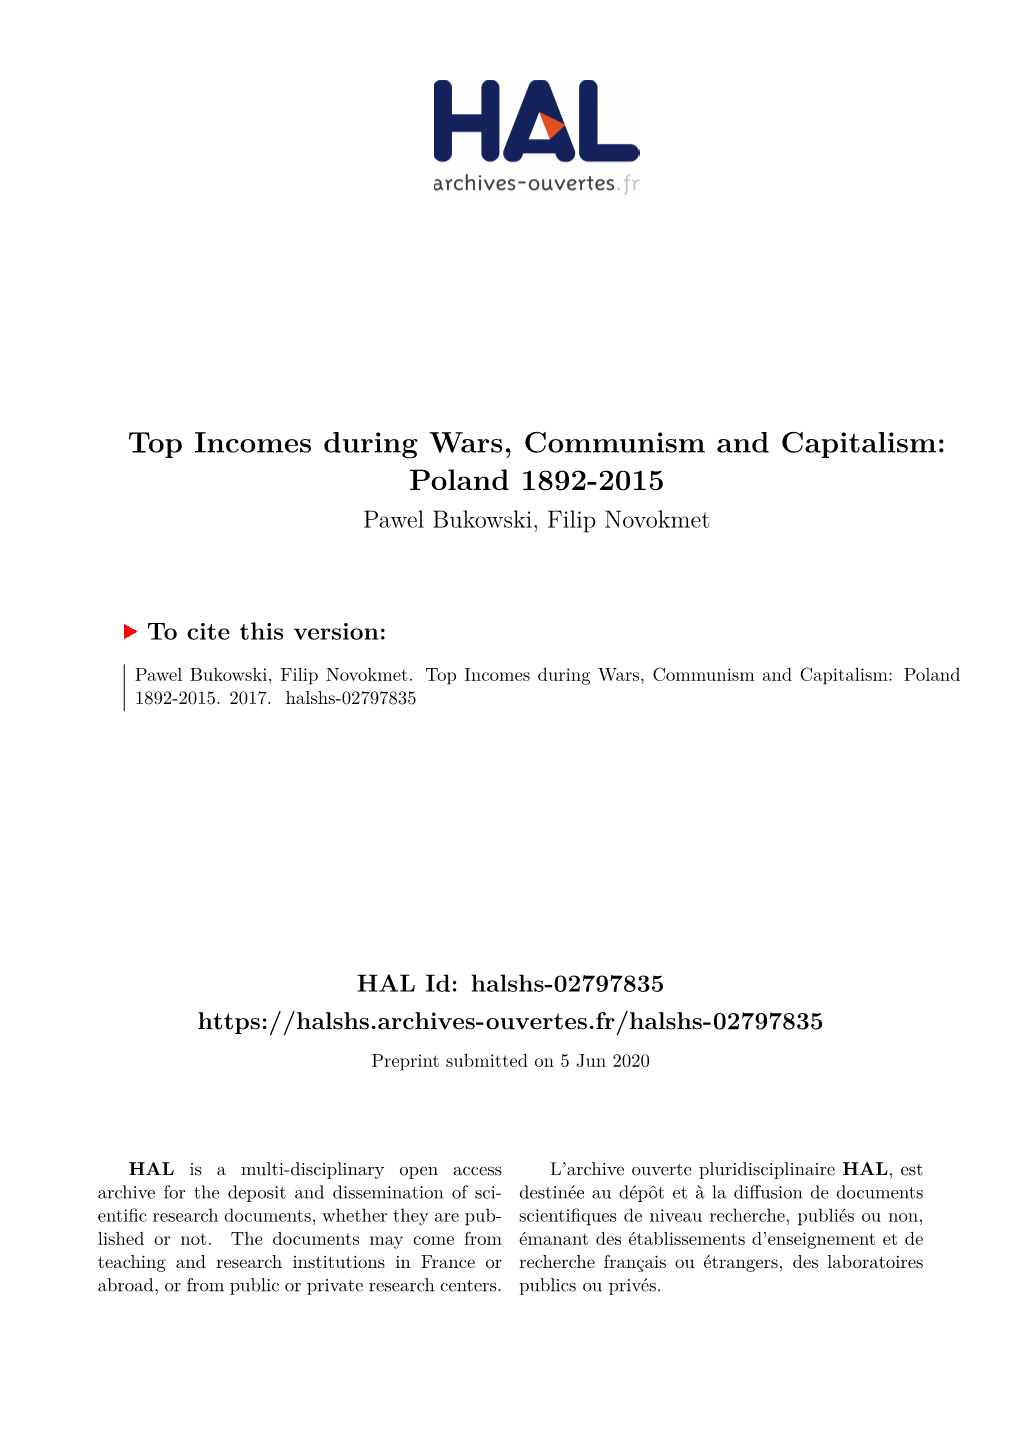 Top Incomes During Wars, Communism and Capitalism: Poland 1892-2015 Pawel Bukowski, Filip Novokmet